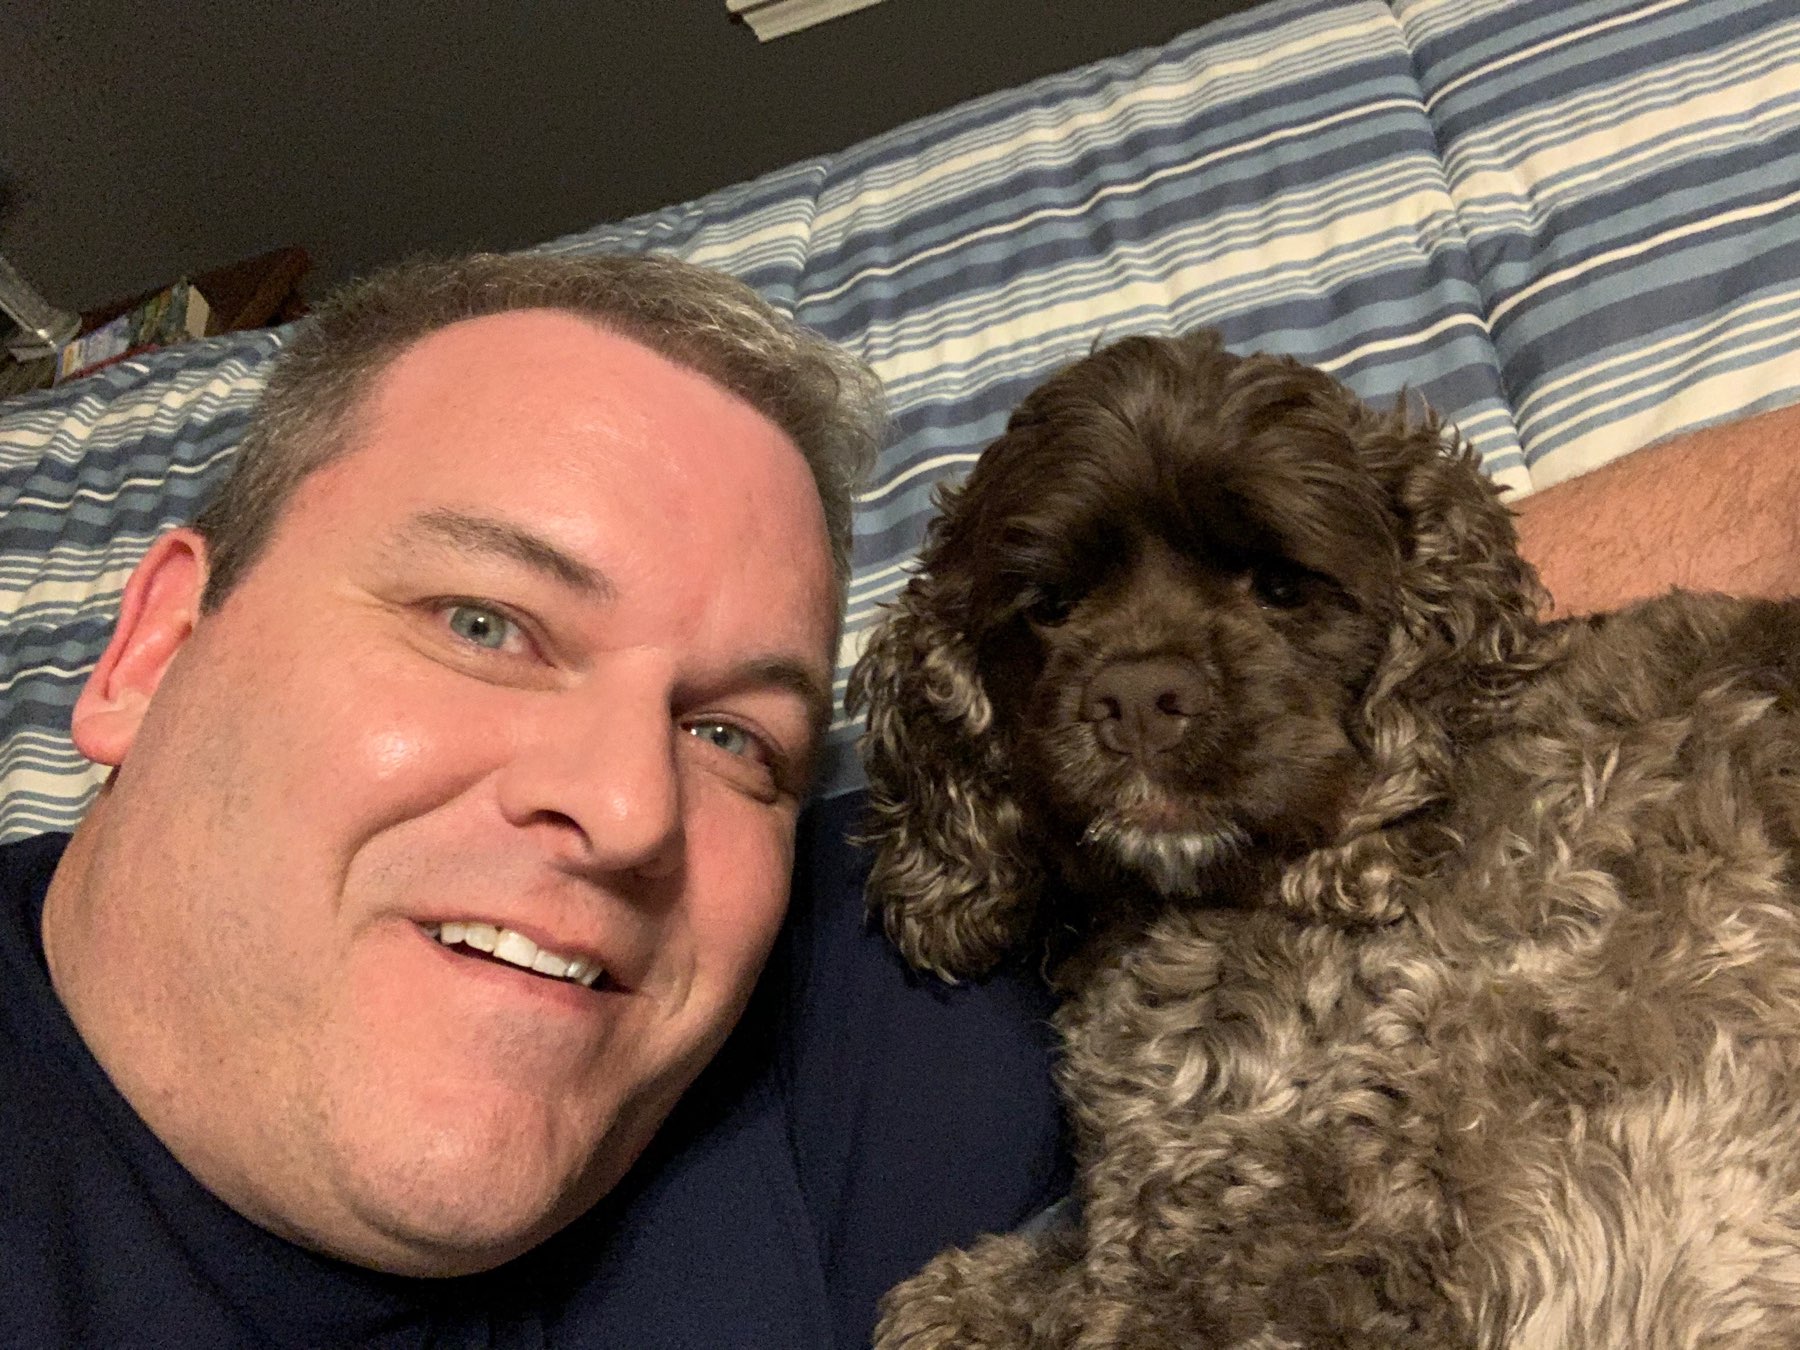 A selfie with my dog Brigit